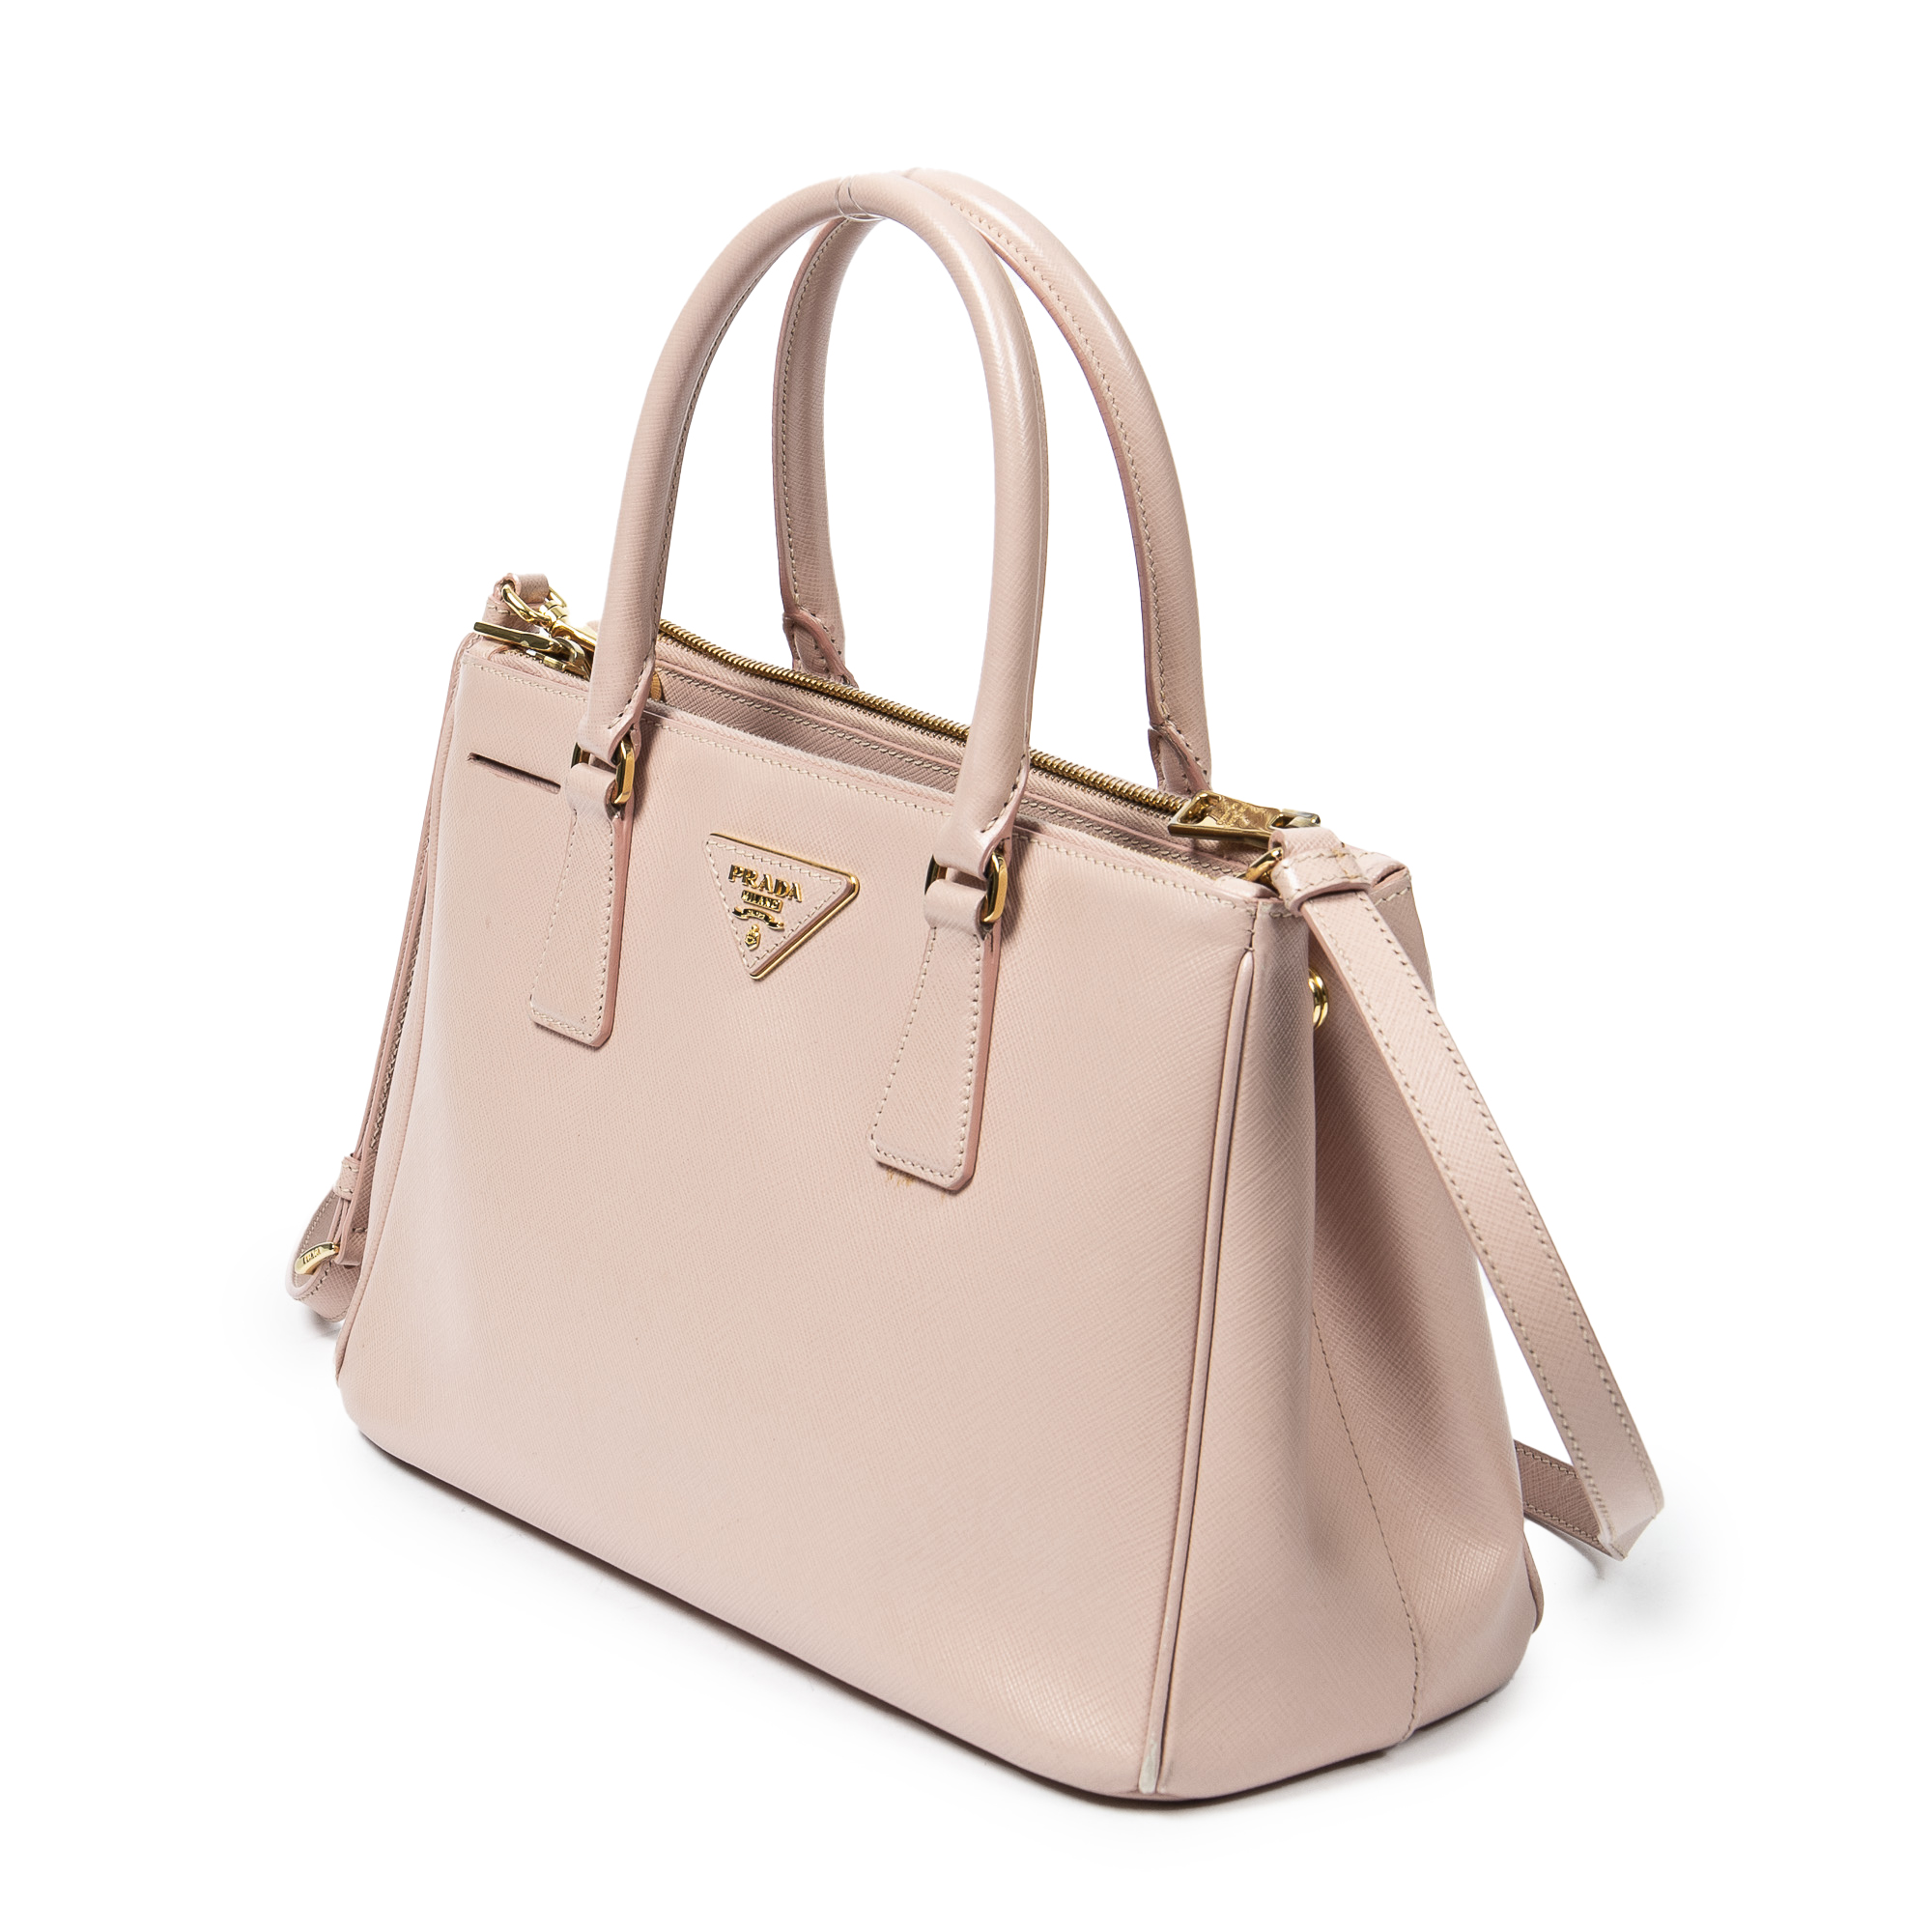 Prada Prada Galleria Extra Large handbag in pink Saffiano Leather